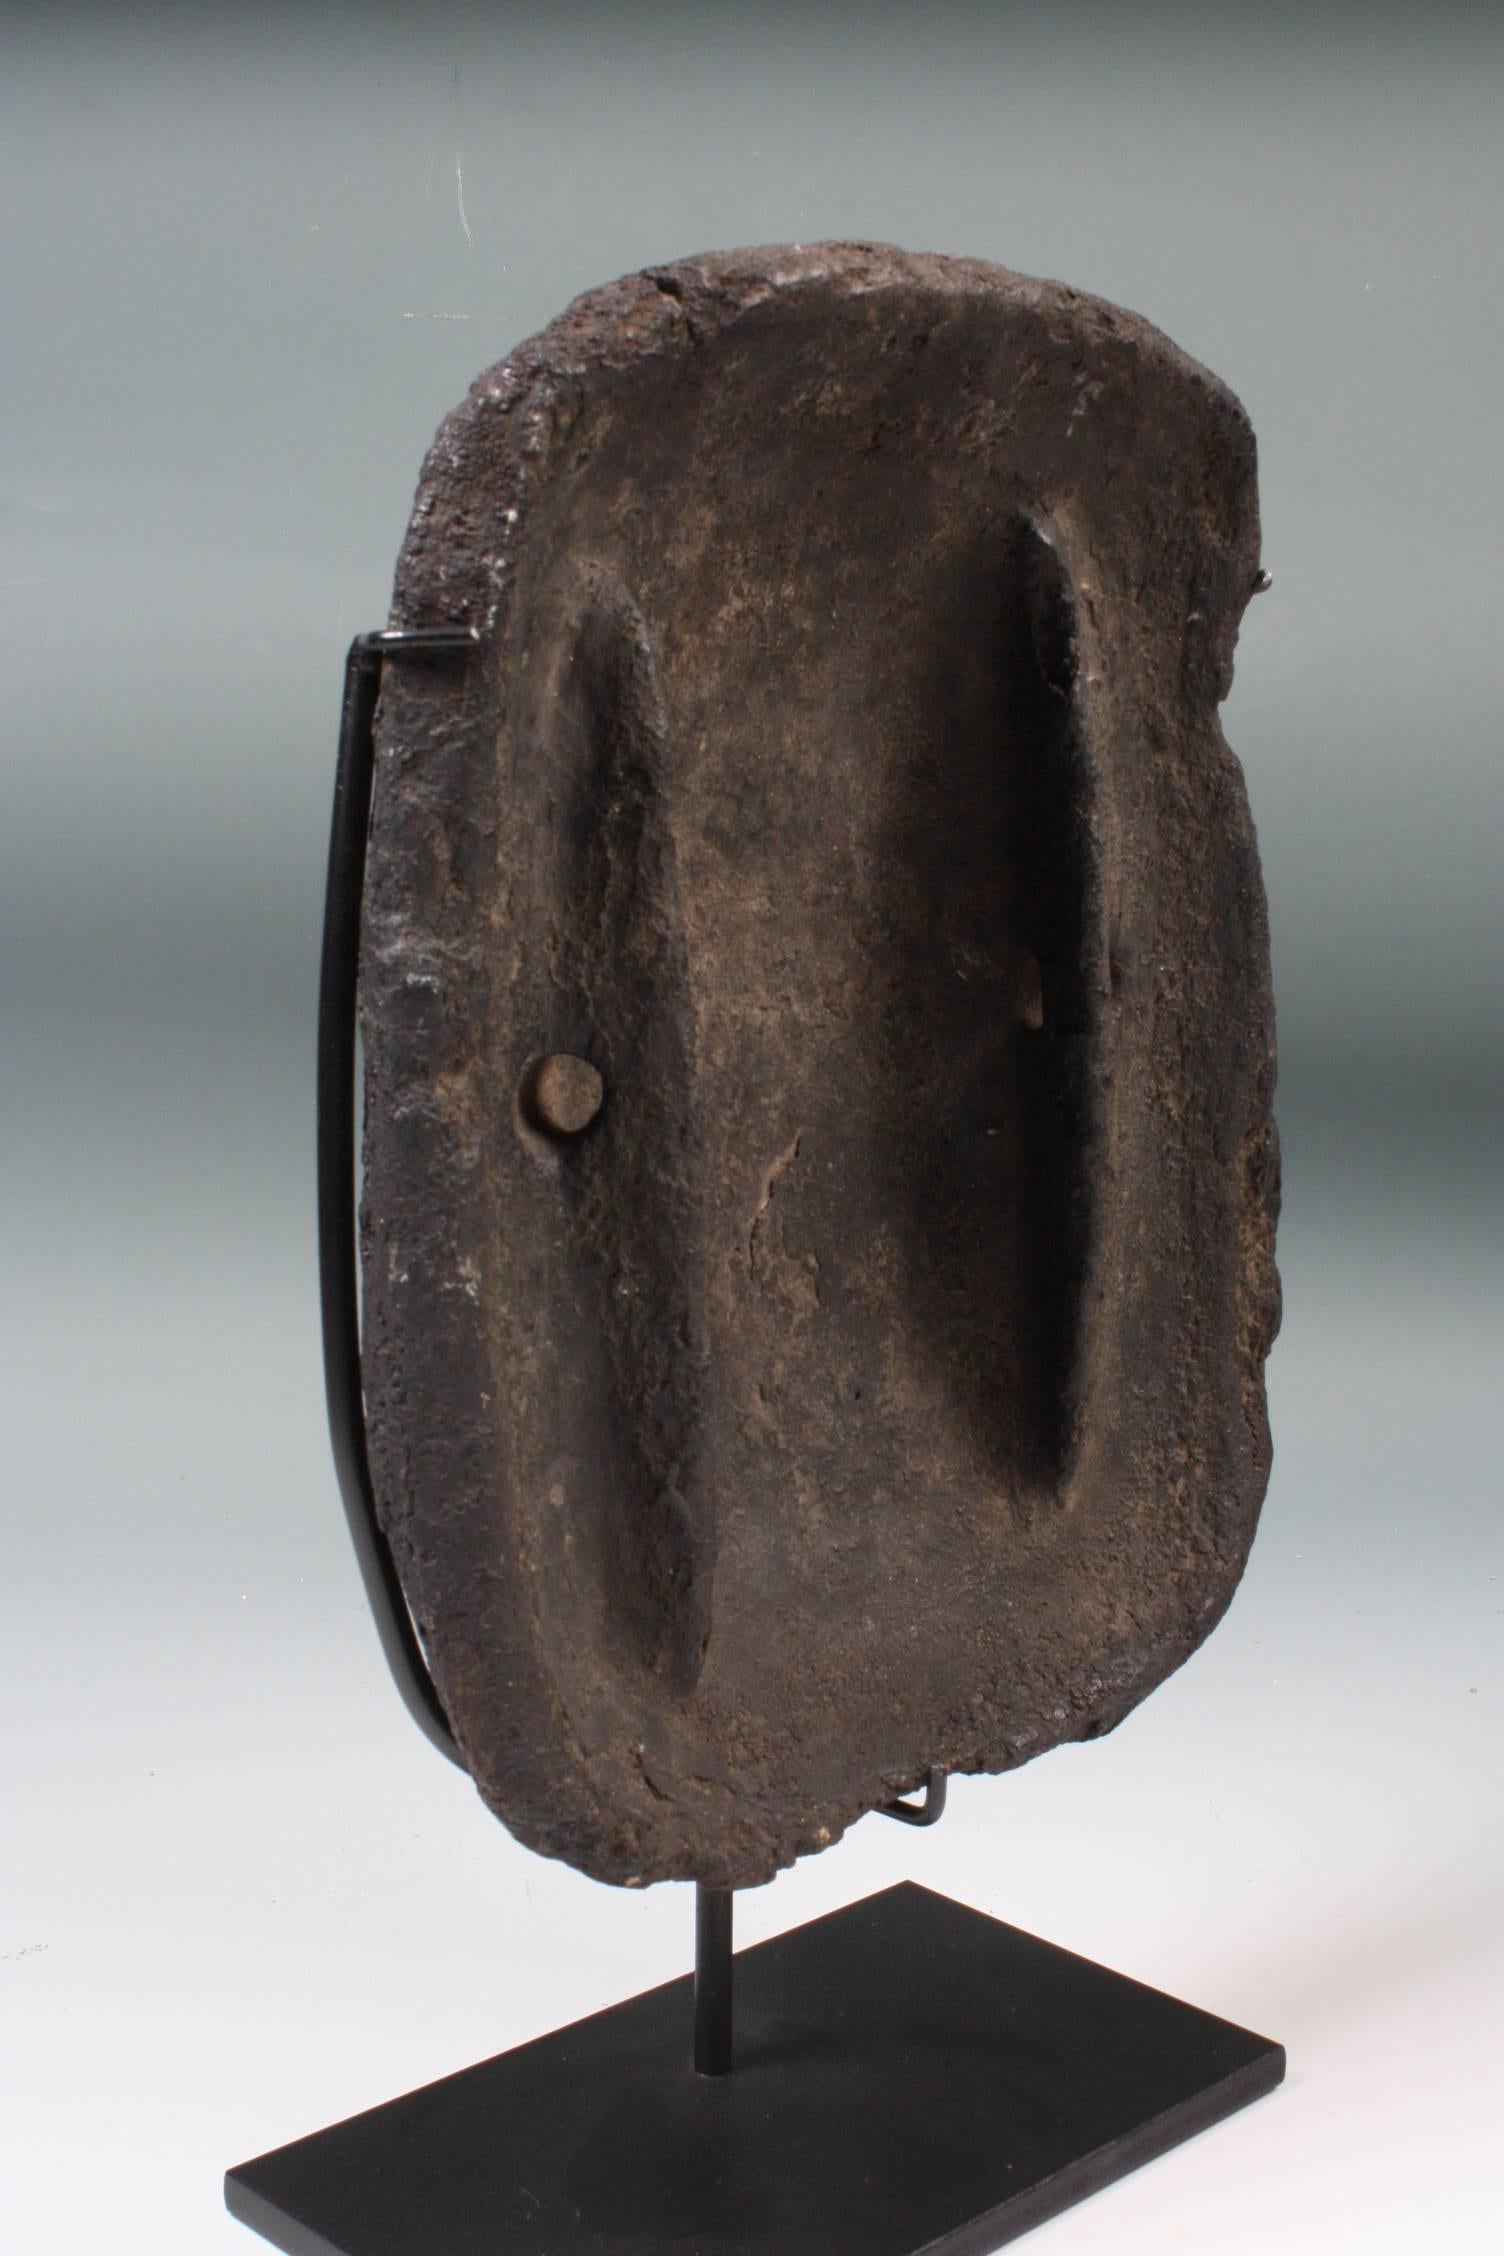 Presented by: Tribalmania Gallery

Ancient Inuit Eskimo stone 